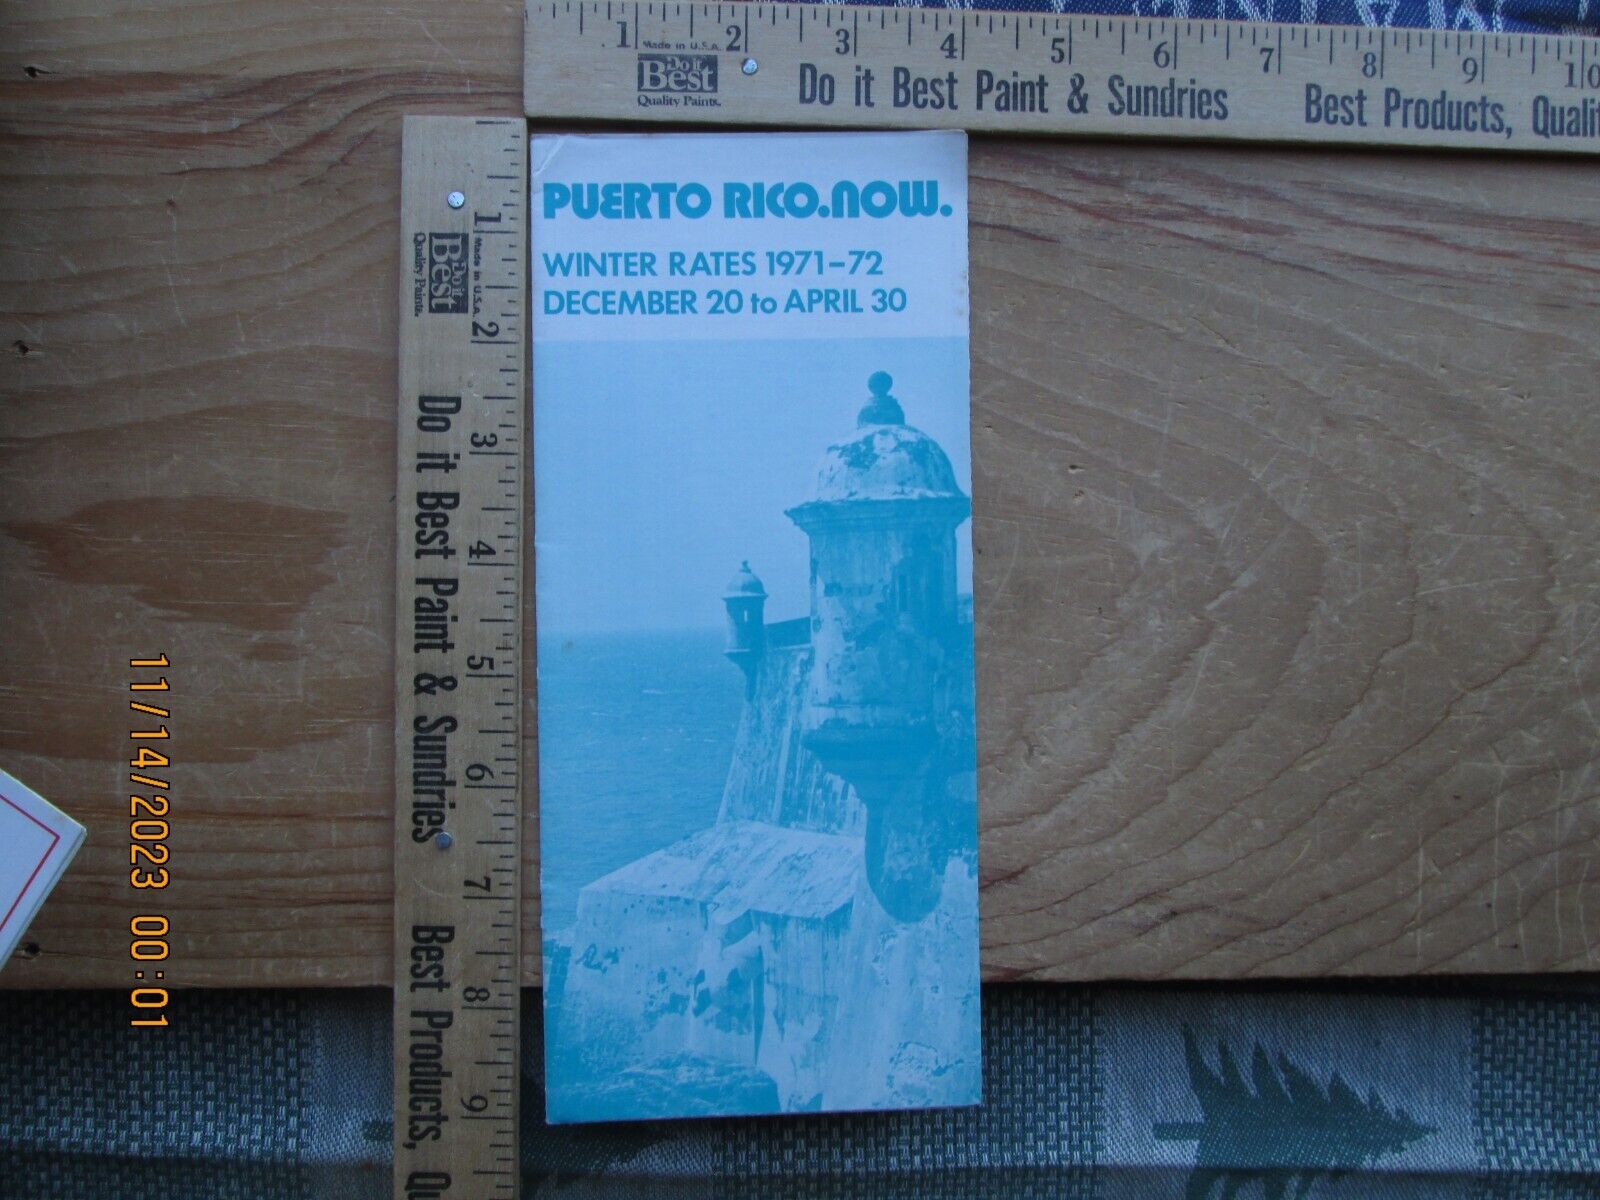 Puerto Rico now hotel winter rates 1971 1972 brochure